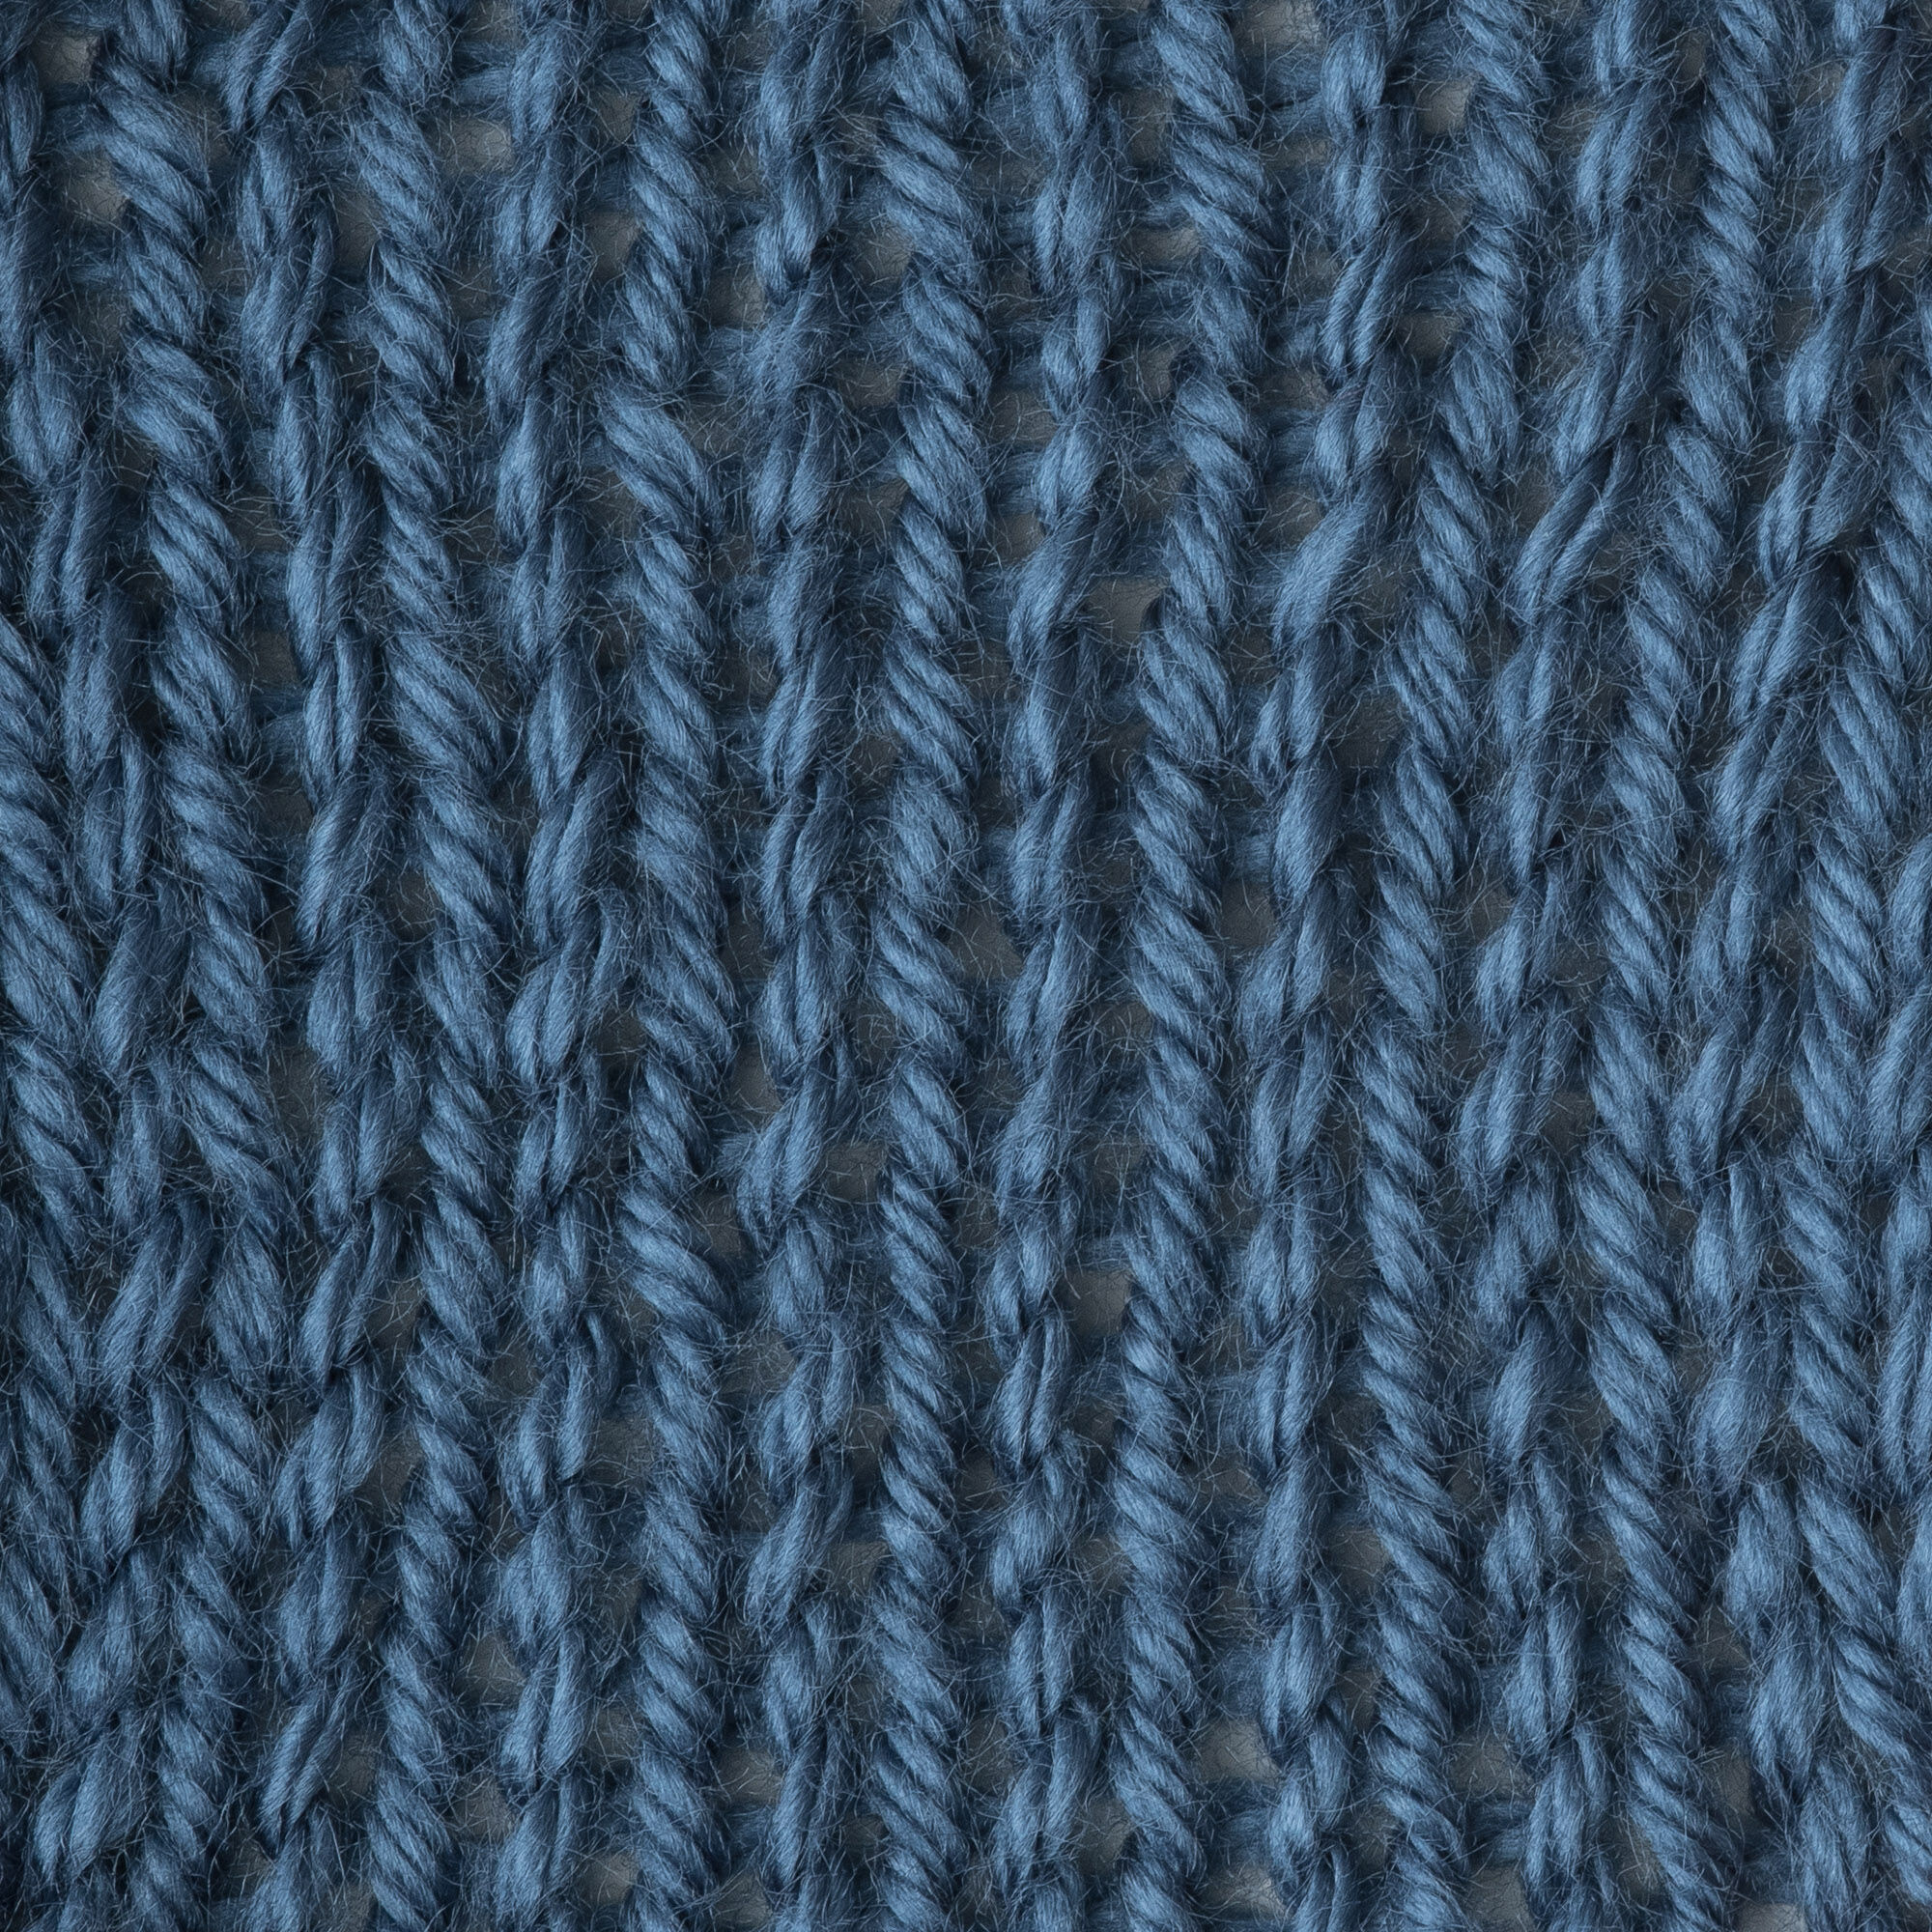 Caron Simply Soft 4 Medium Acrylic Yarn, Country Blue 6oz/170g, 315 Yards - image 5 of 16